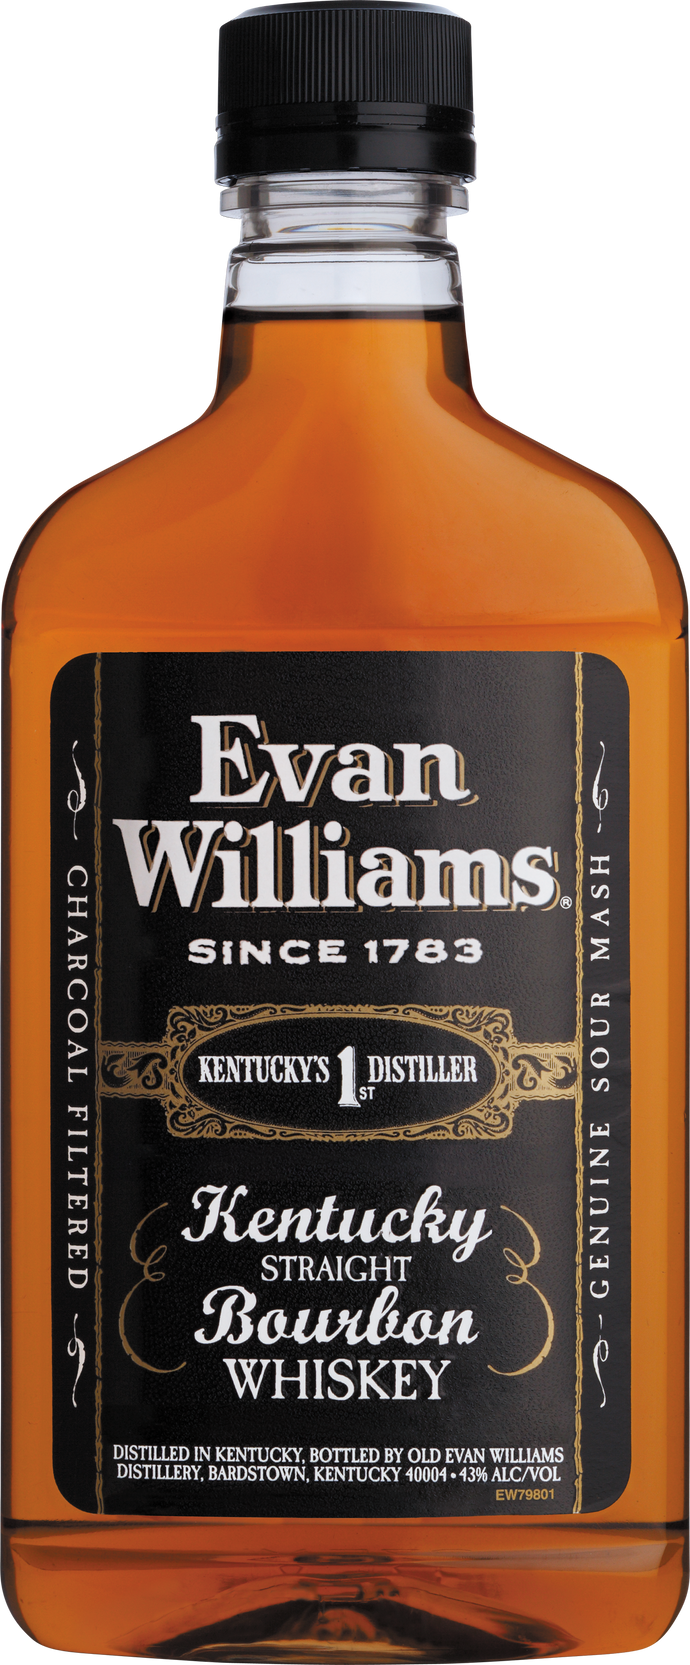 Evan Williams - Kentucky Straight Bourbon Whiskey 375mL Type: Liquor Categories: 375mL, Bourbon, quantity high enough for online, size_375mL, subtype_Bourbon, subtype_Whiskey, Whiskey. Buy today at Wine and Liquor Mart Poughkeepsie